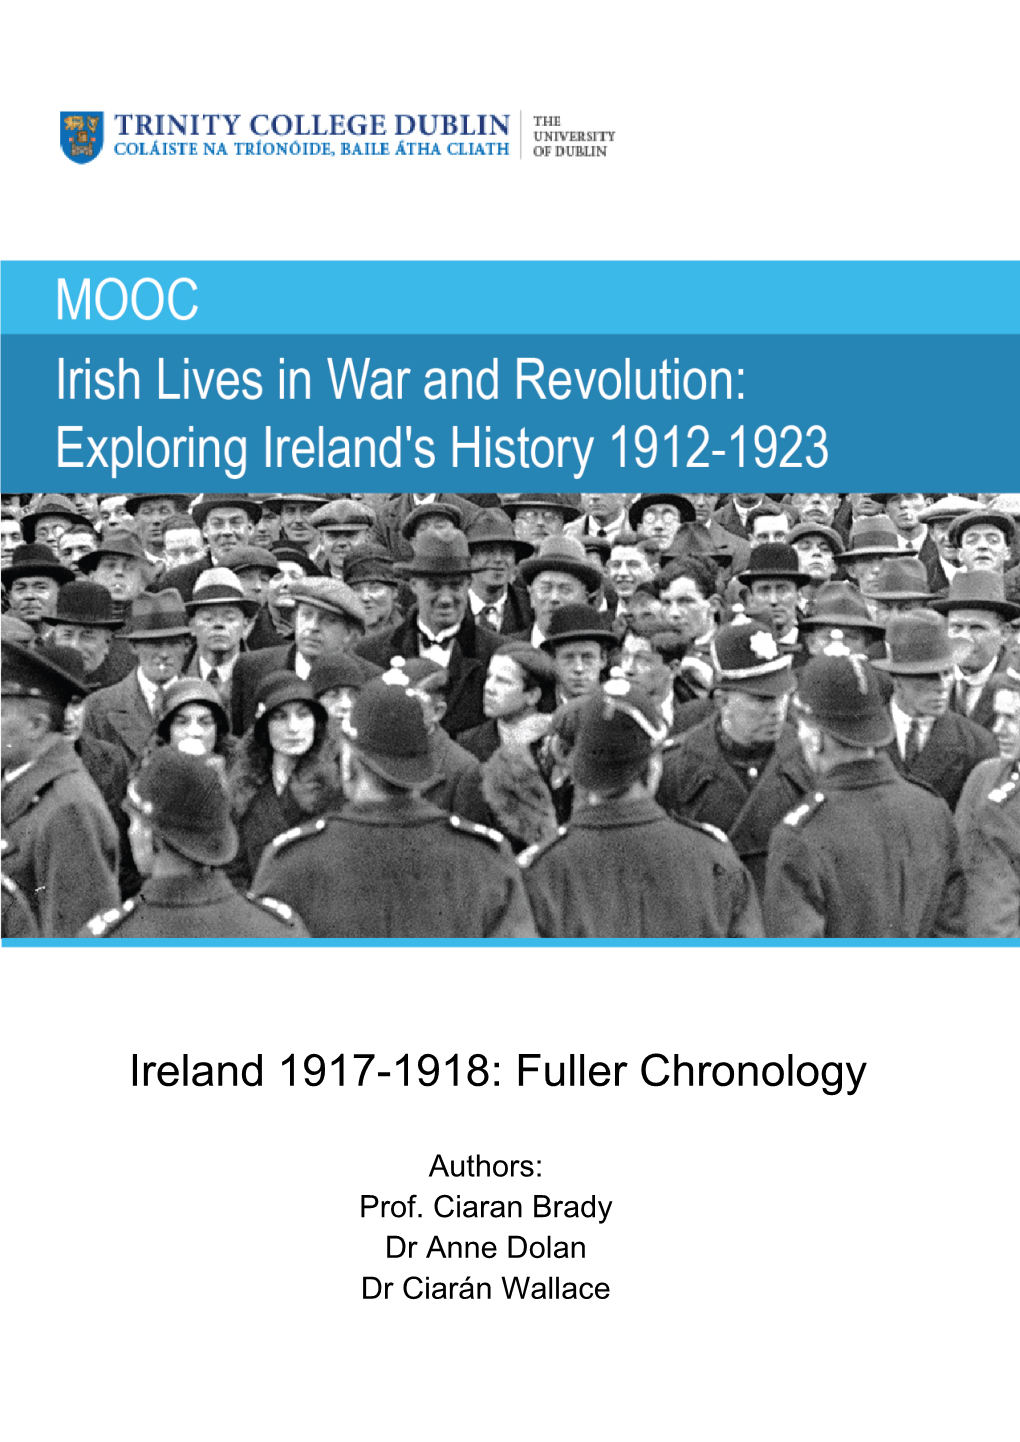 Ireland 1917-1918: Fuller Chronology